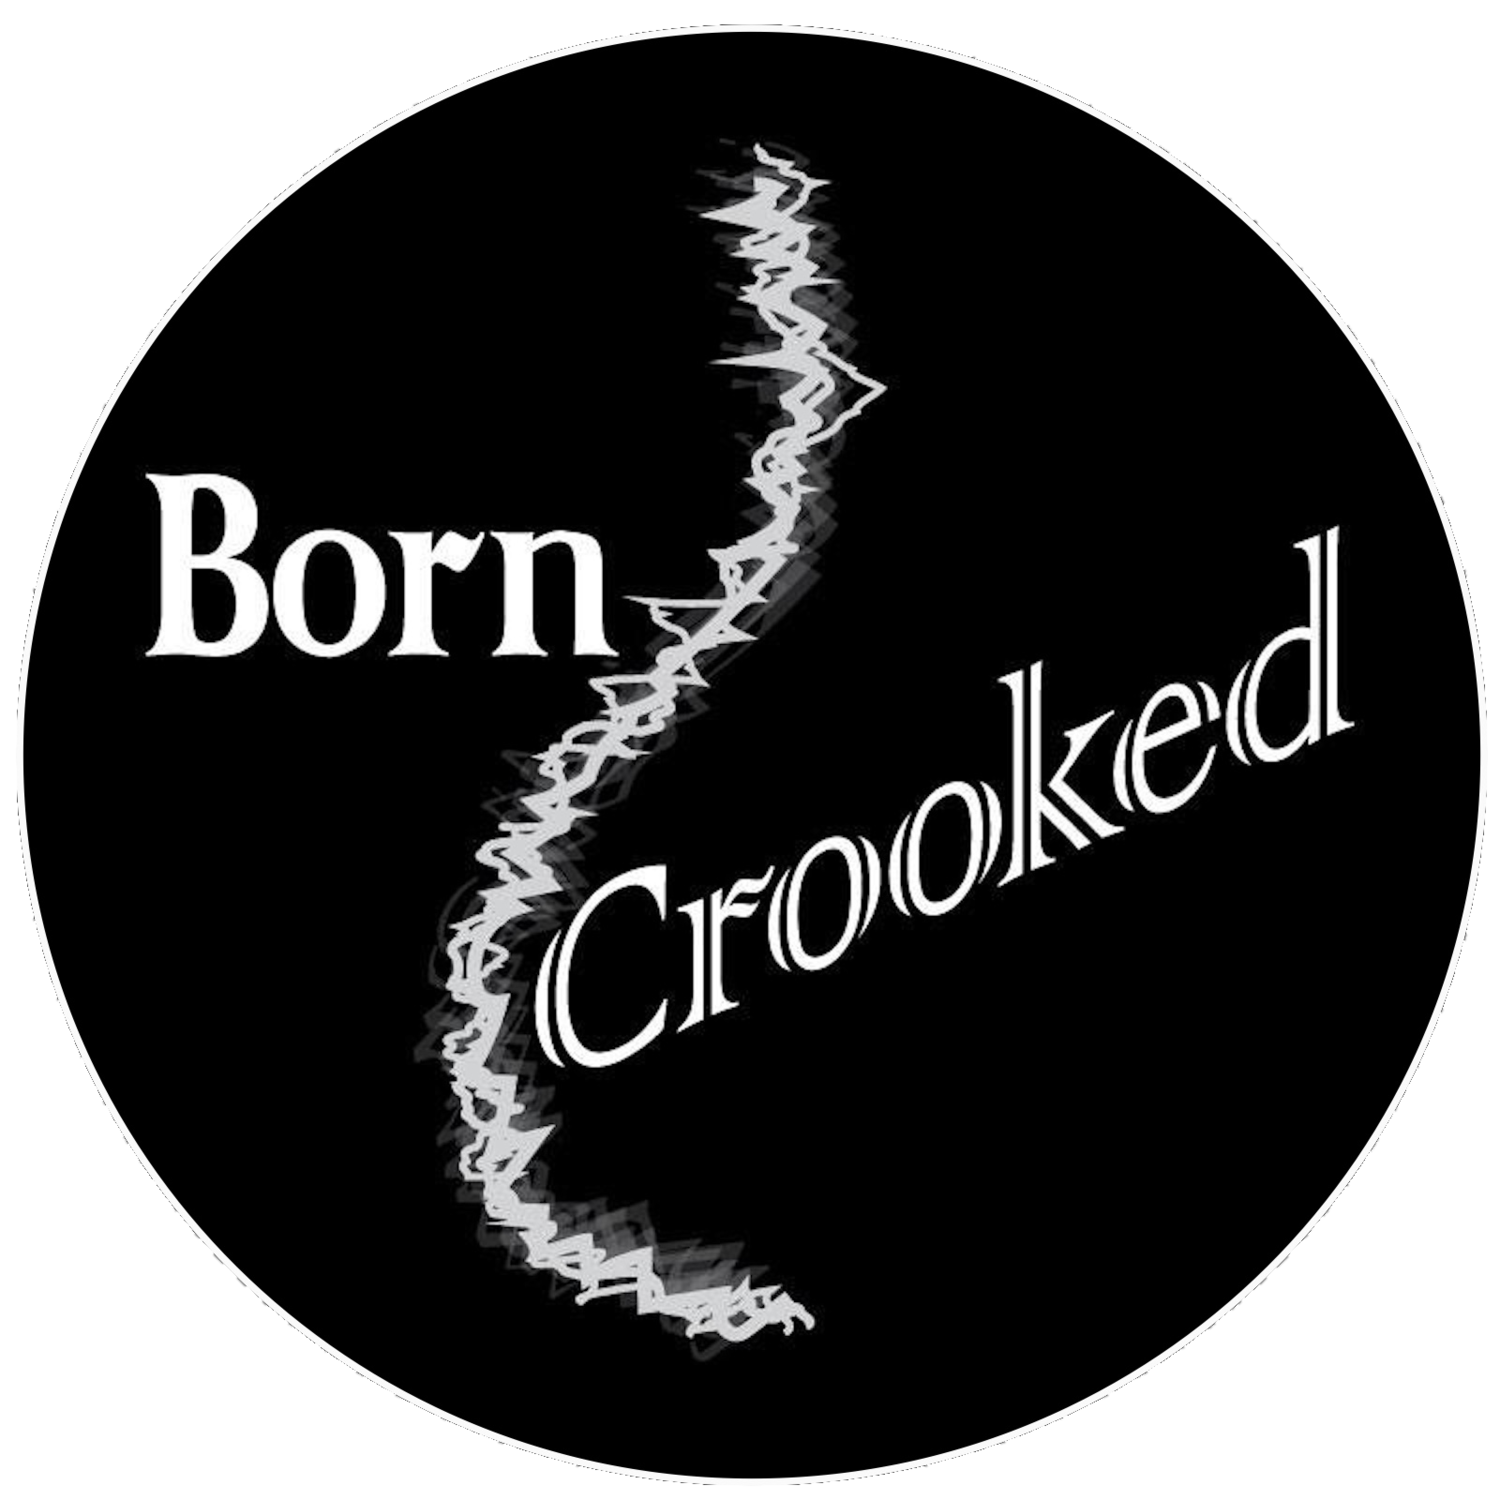 Born Crooked